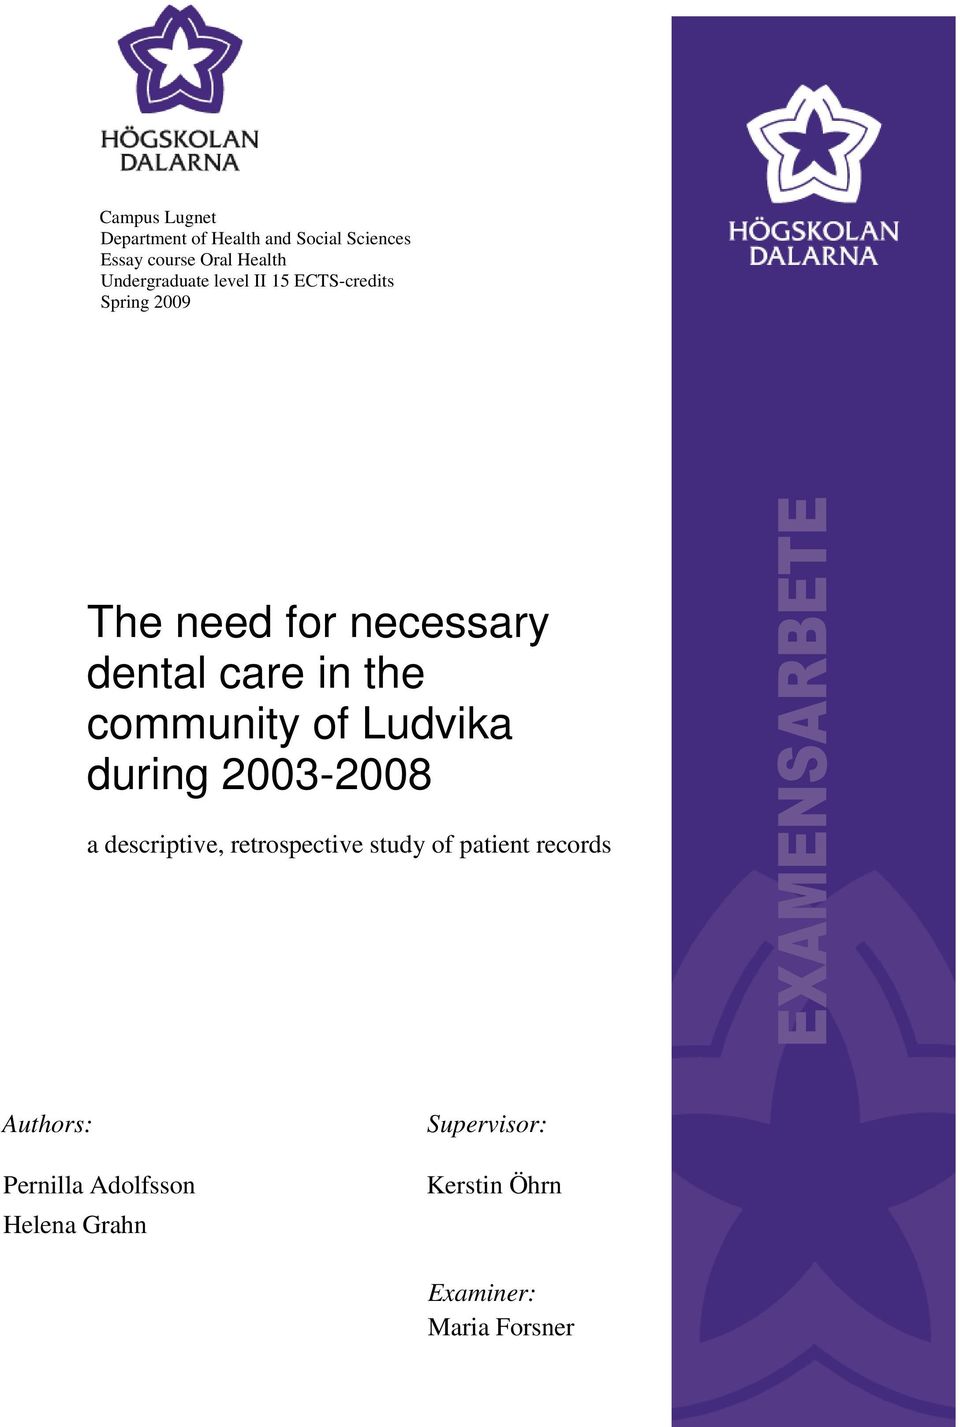 the community of Ludvika during 2003-2008 a descriptive, retrospective study of patient